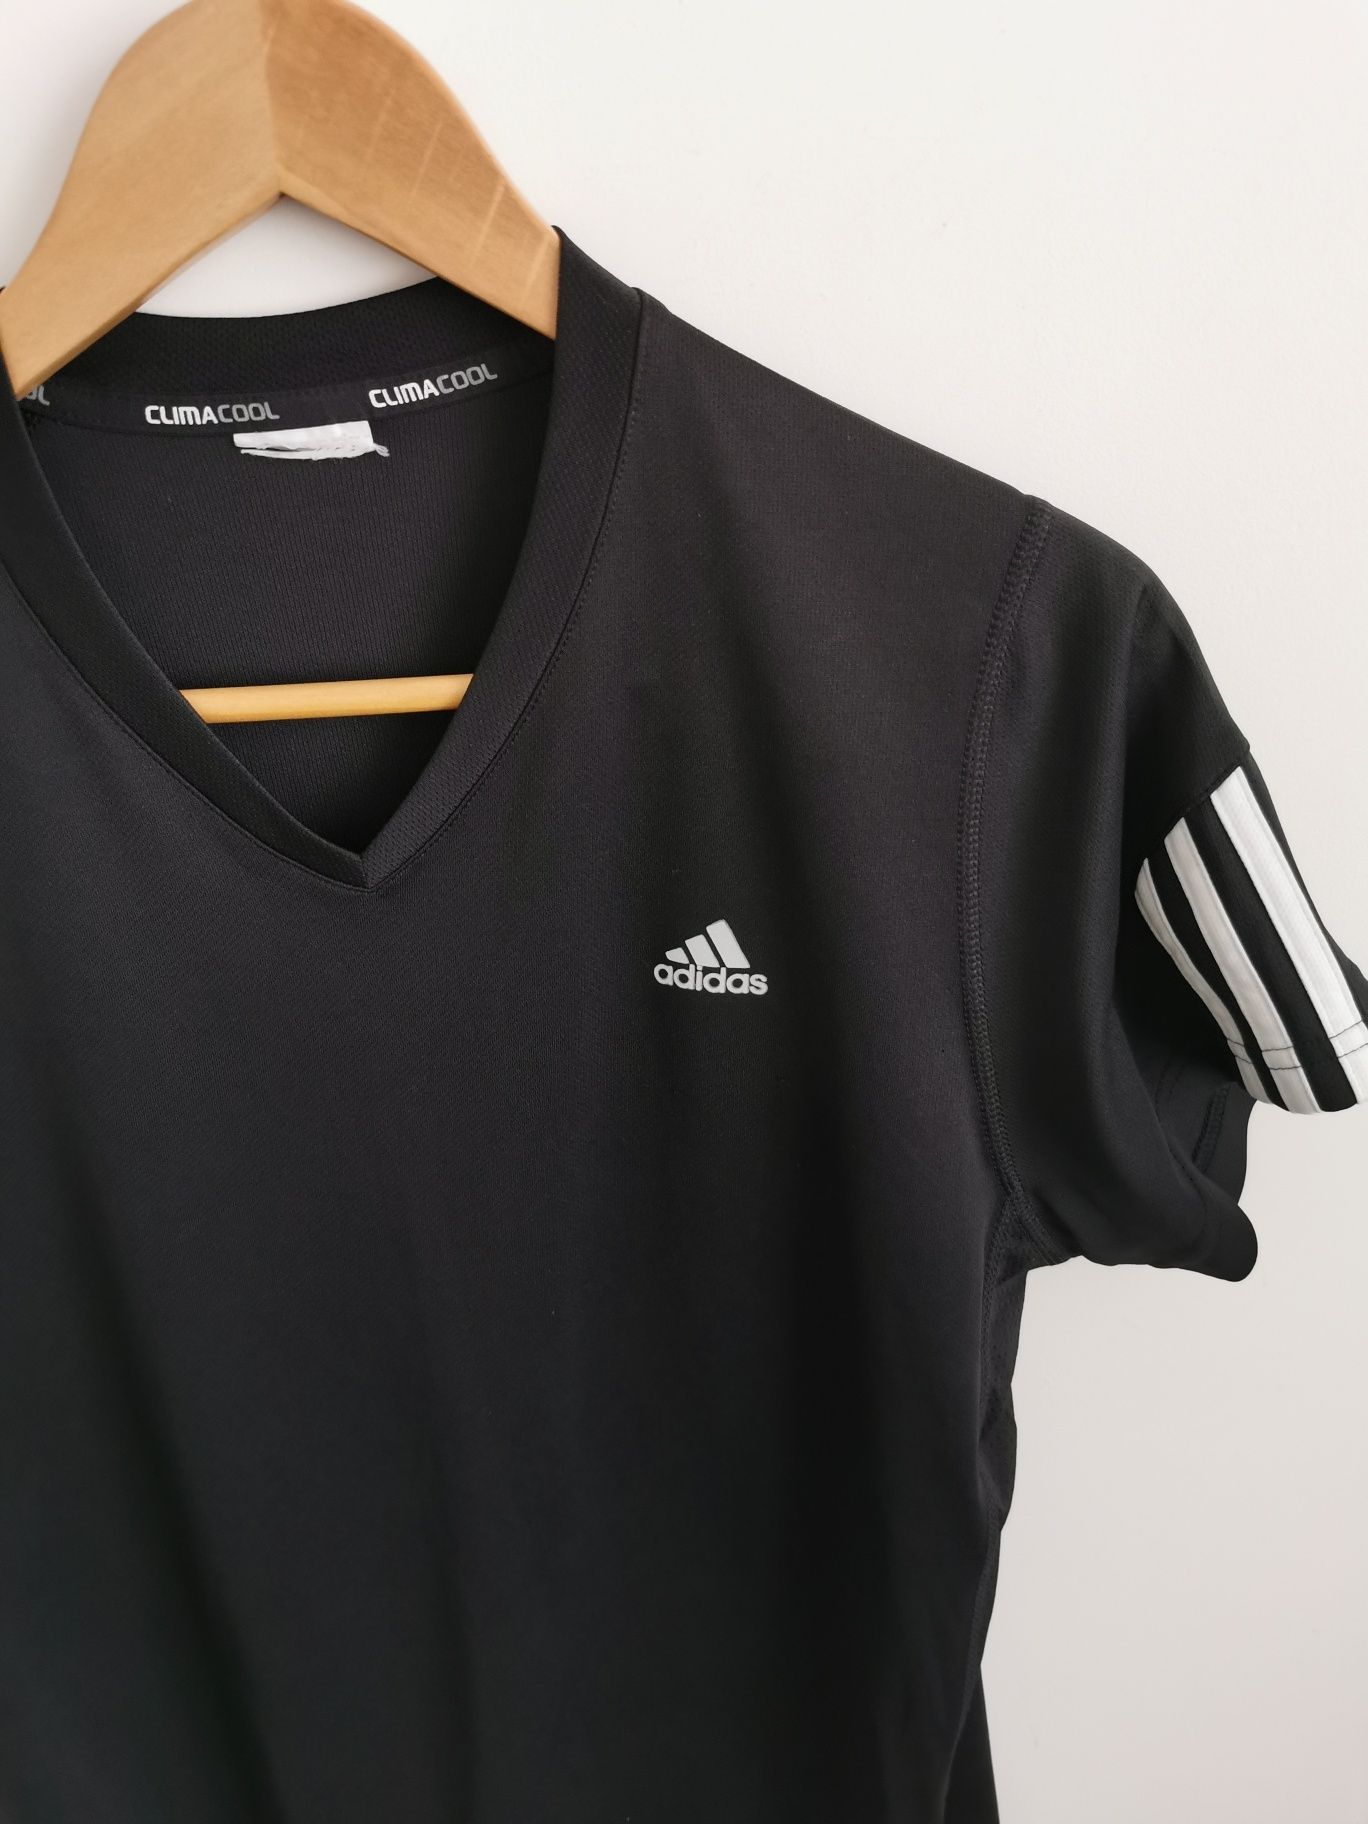 Adidas koszulka krótki rękaw sportowa t-shirt damska L